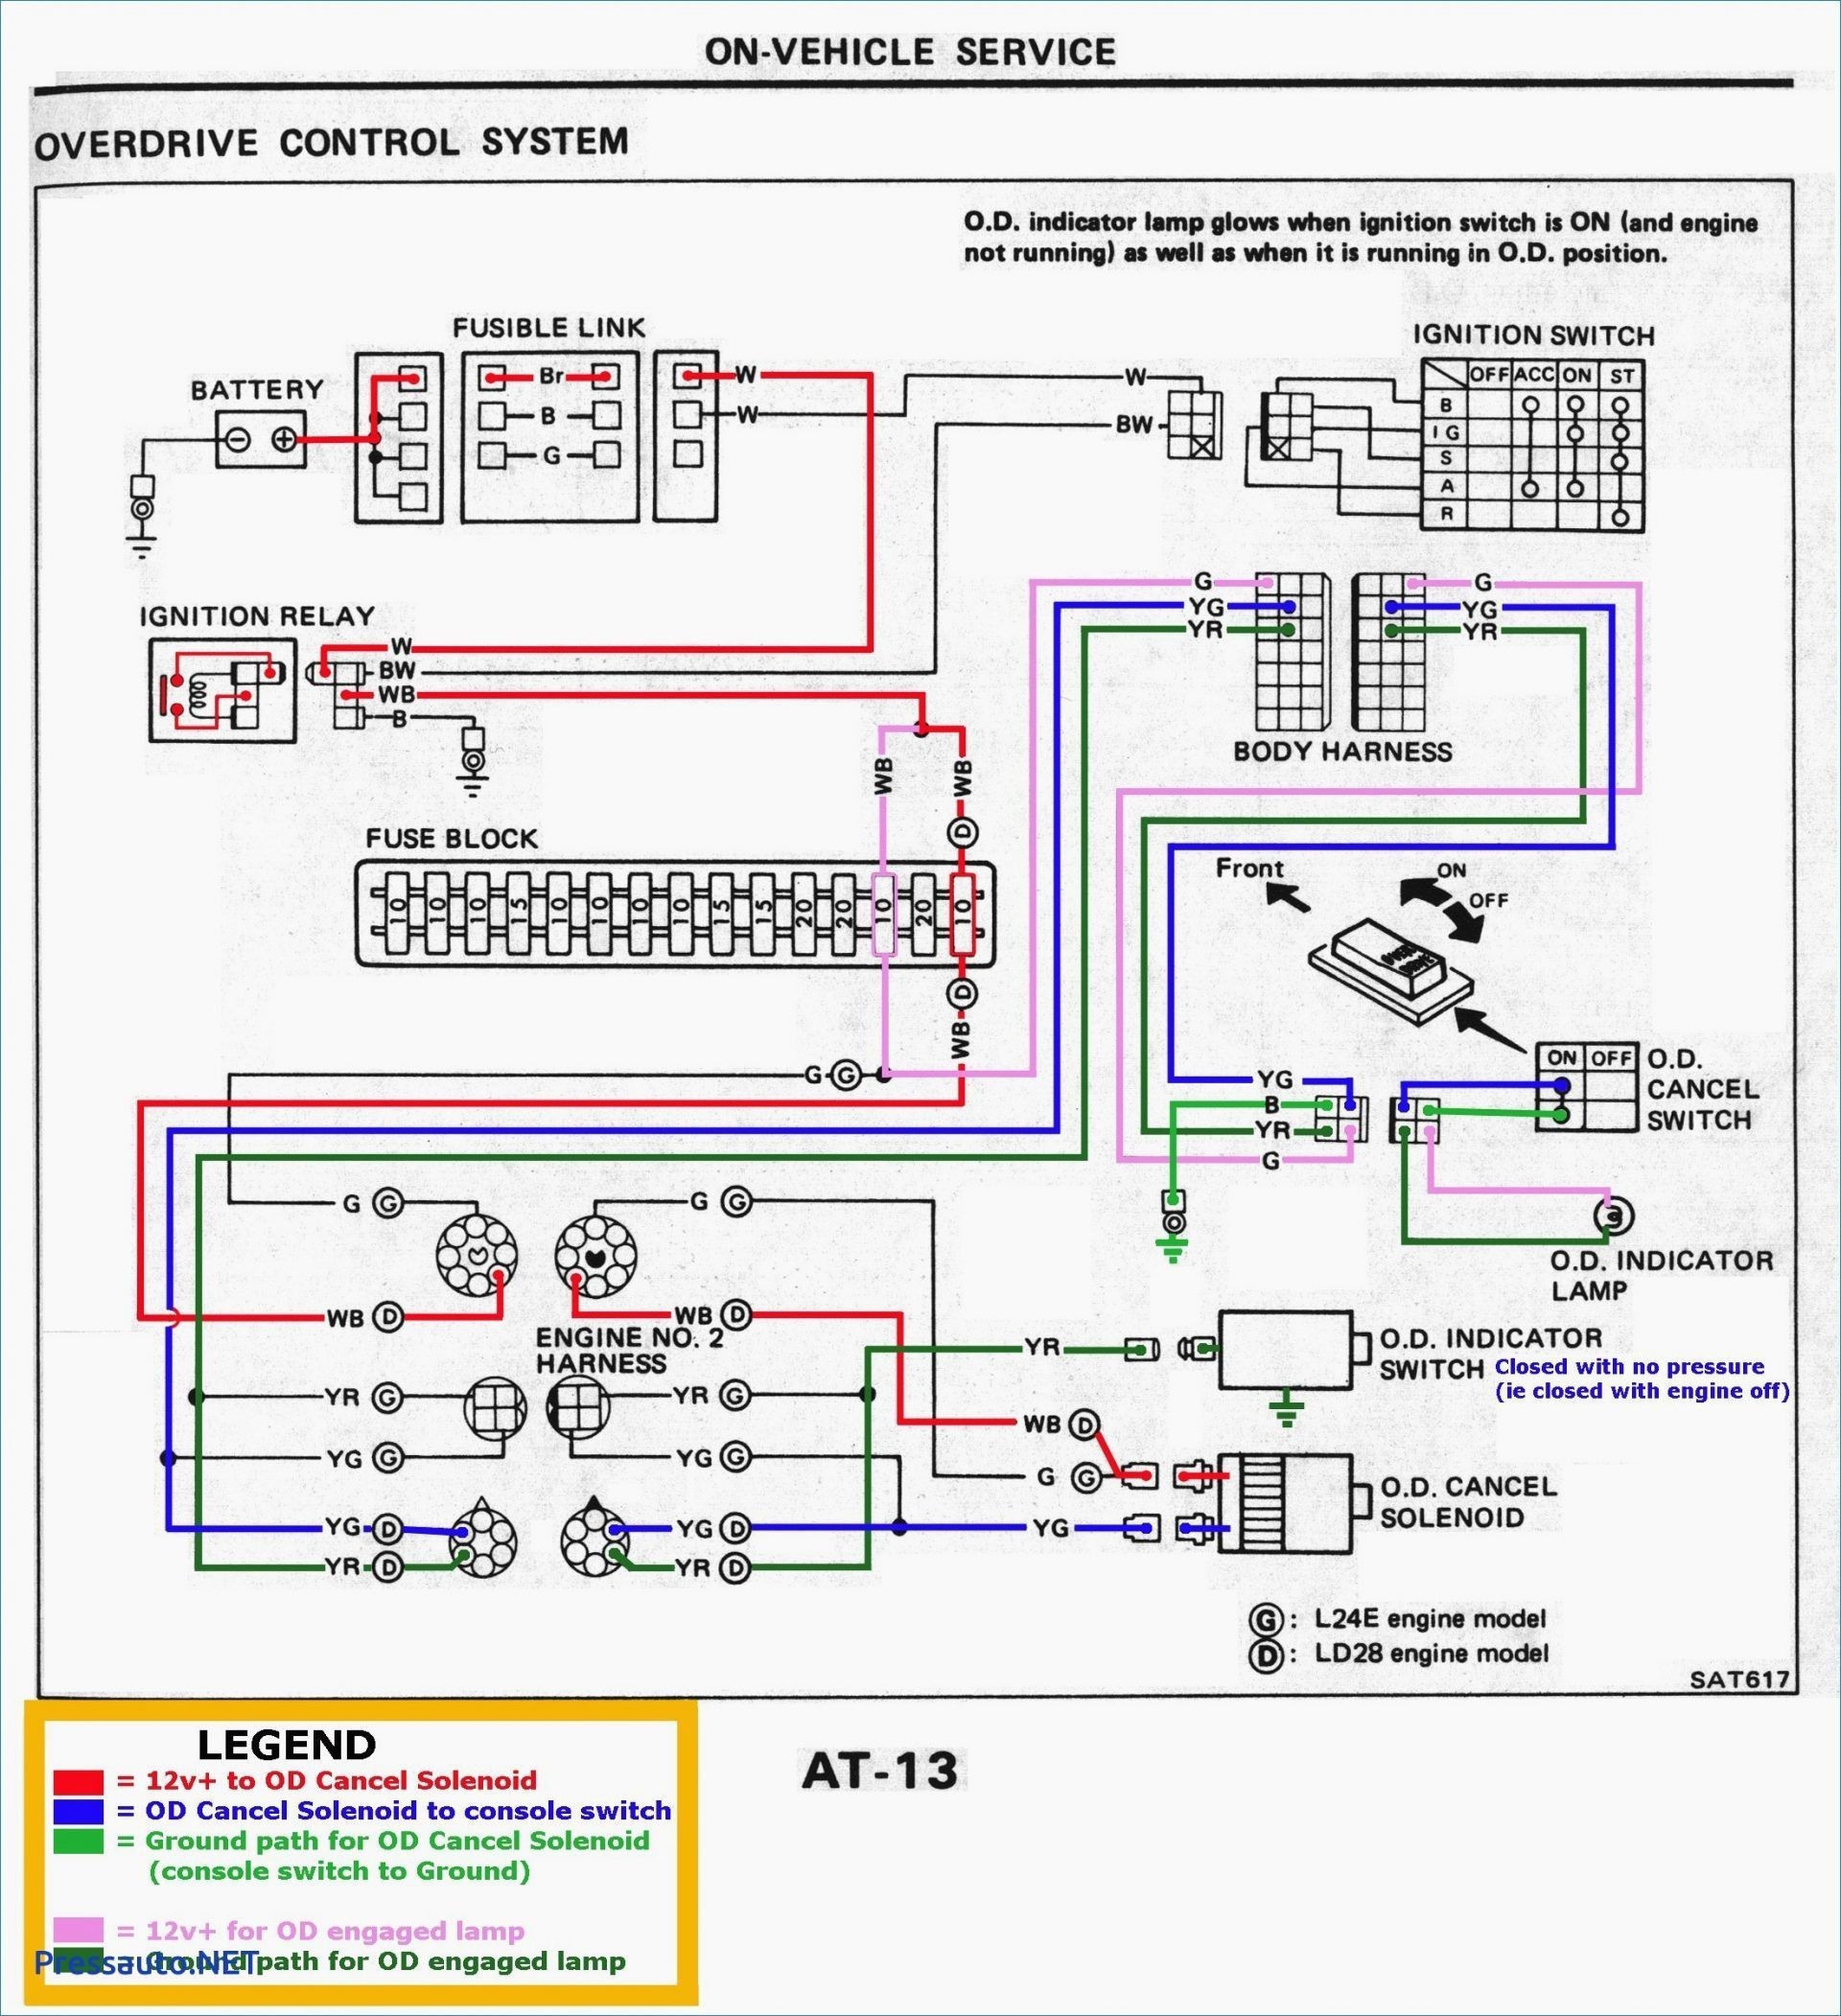 Opel Lights Wiring Diagram Wiring Diagram World Opel Lights Wiring Diagram